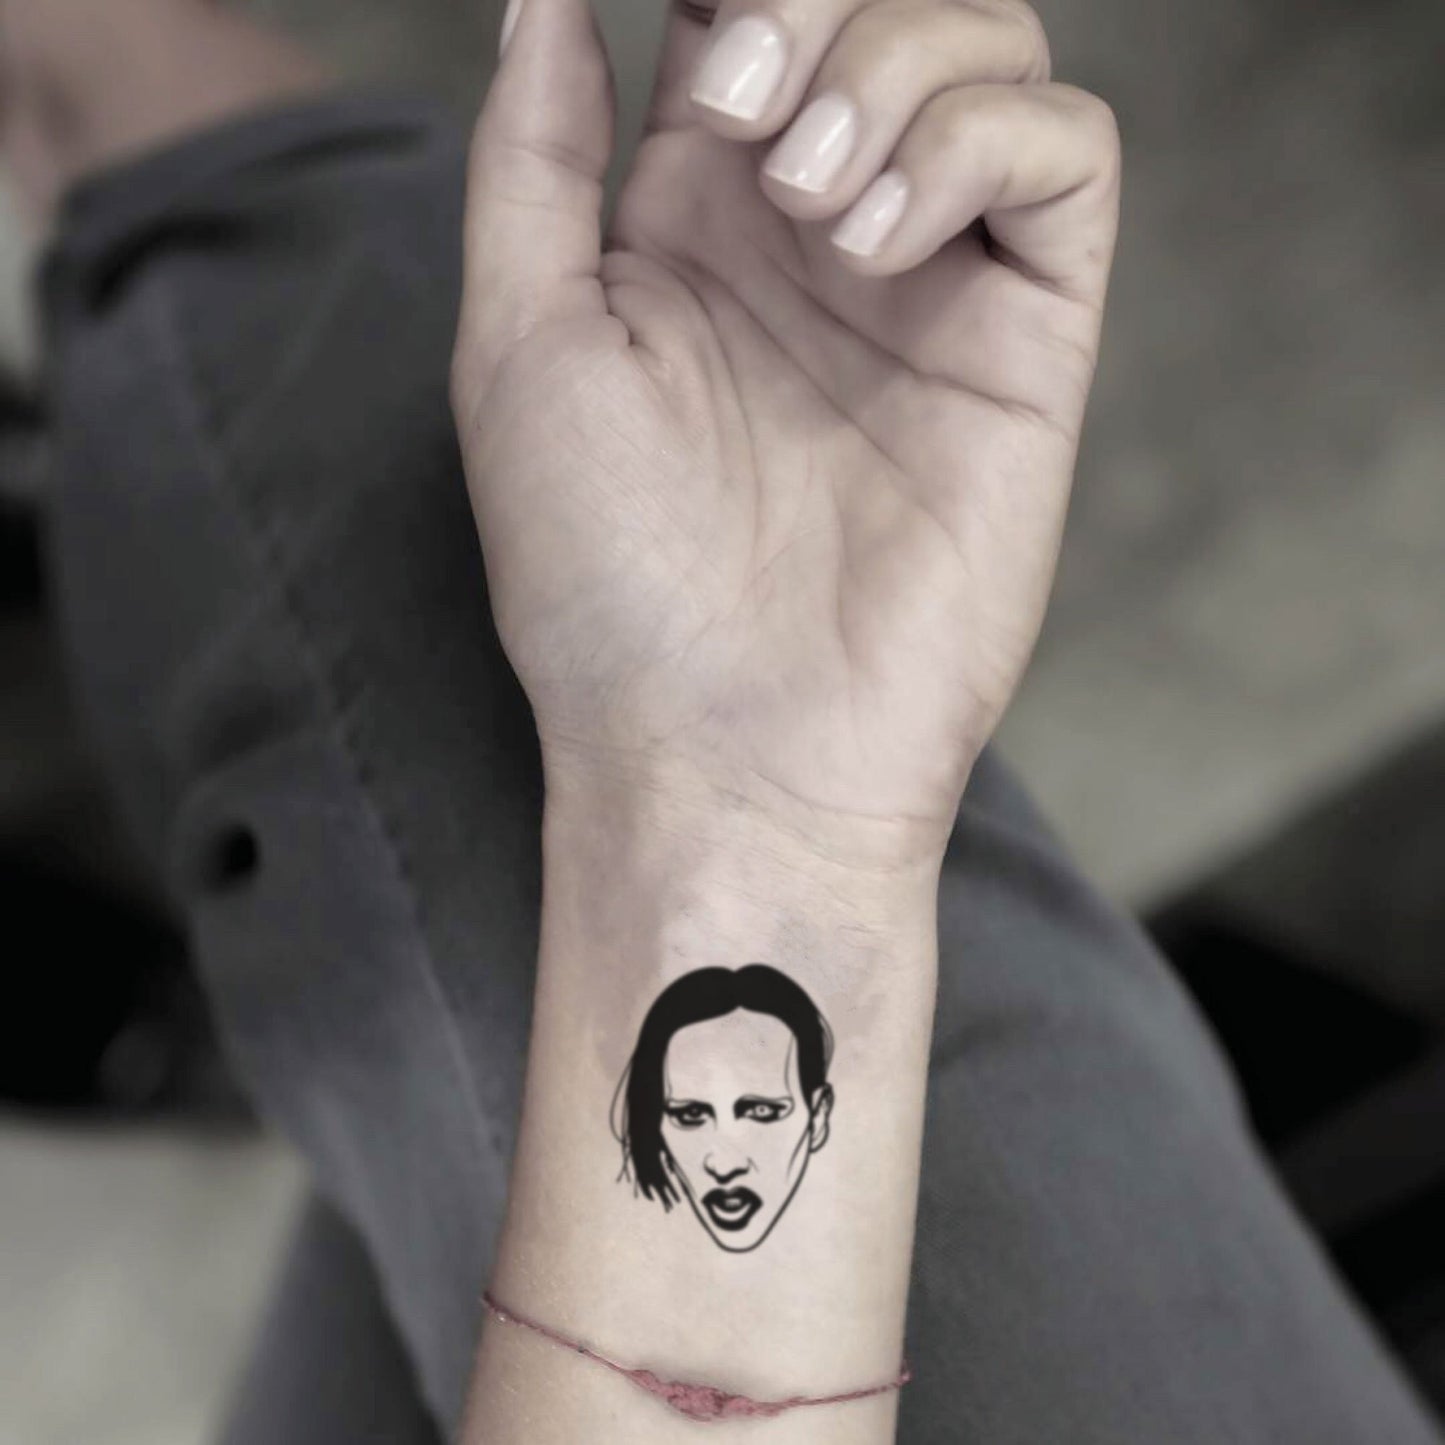 fake small manson portrait temporary tattoo sticker design idea on wrist